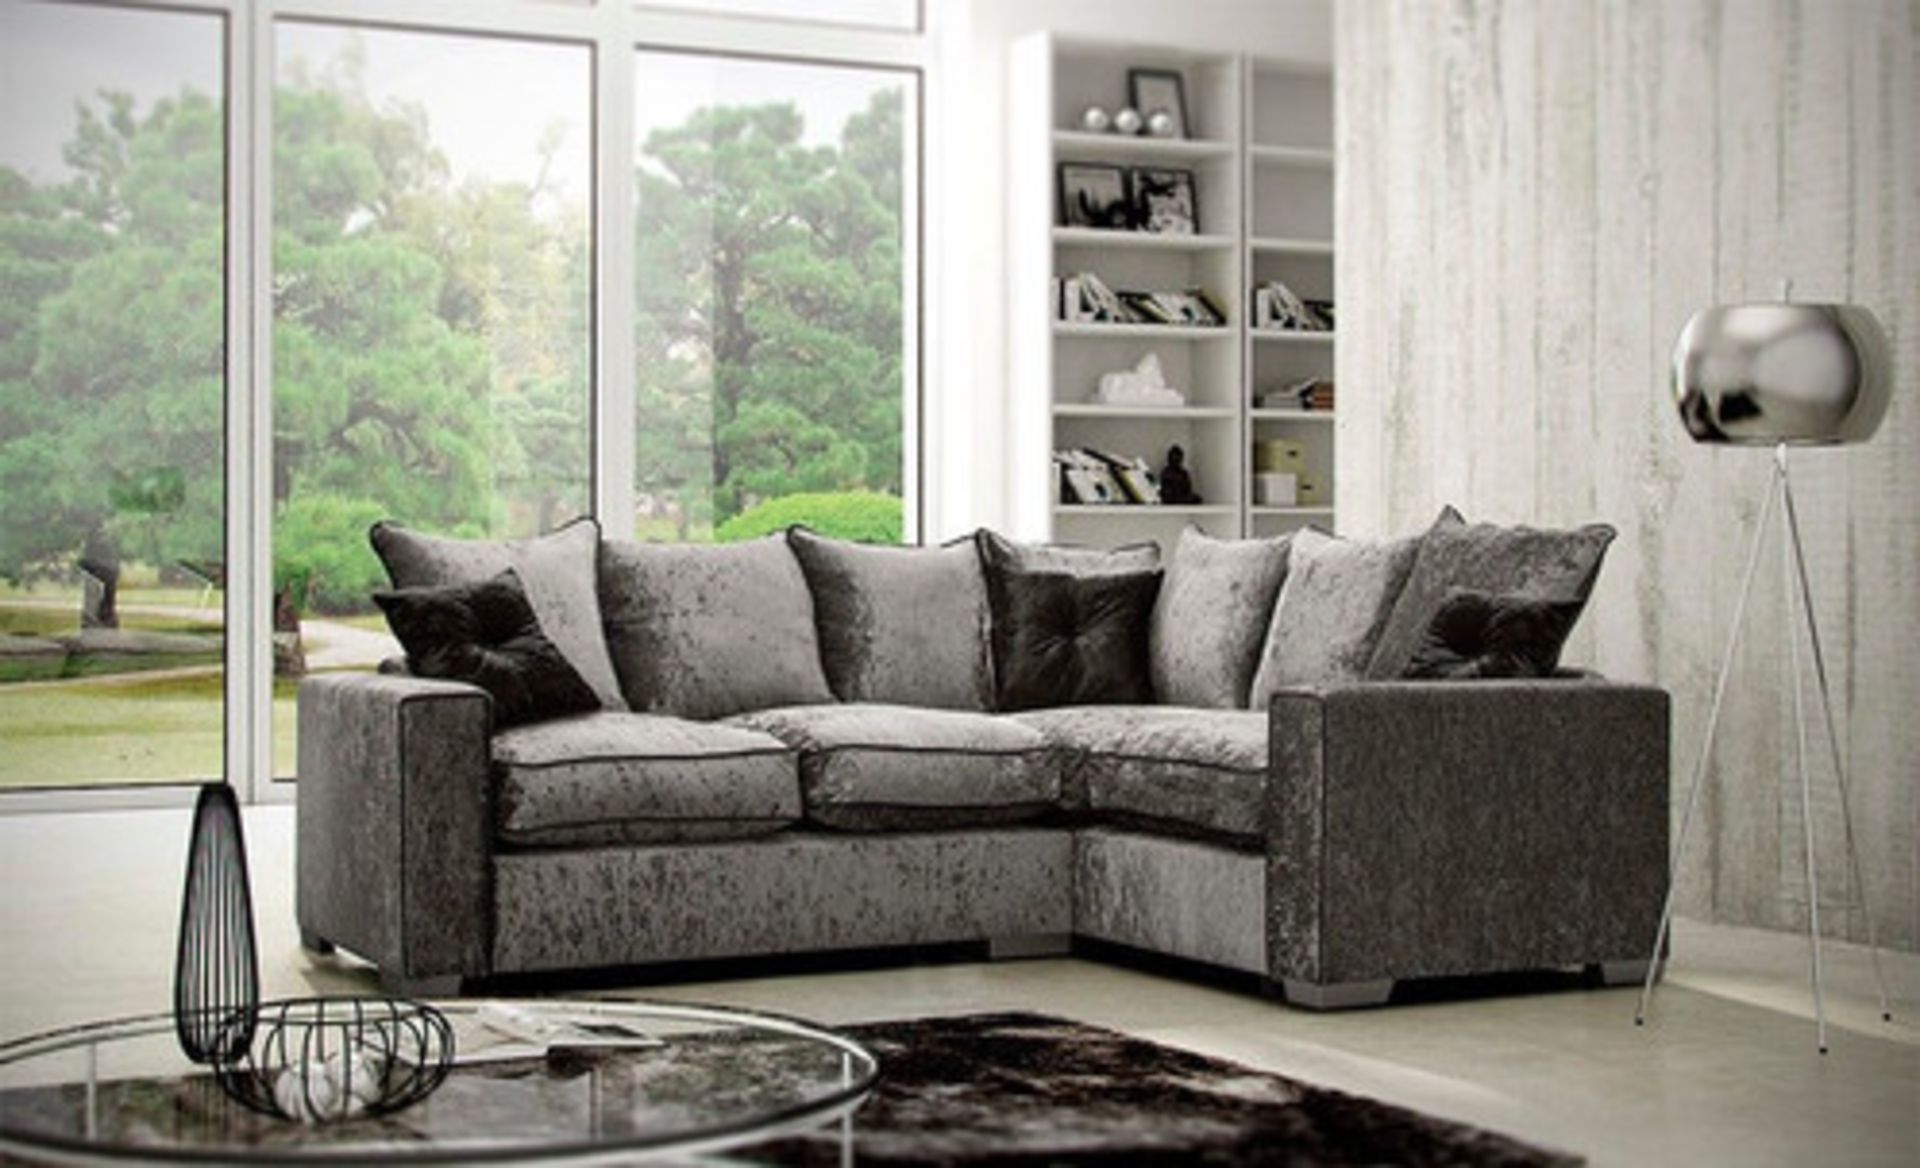 Festival velvet 1c2 corner sofa in ebony glitz and silver glitz fabric